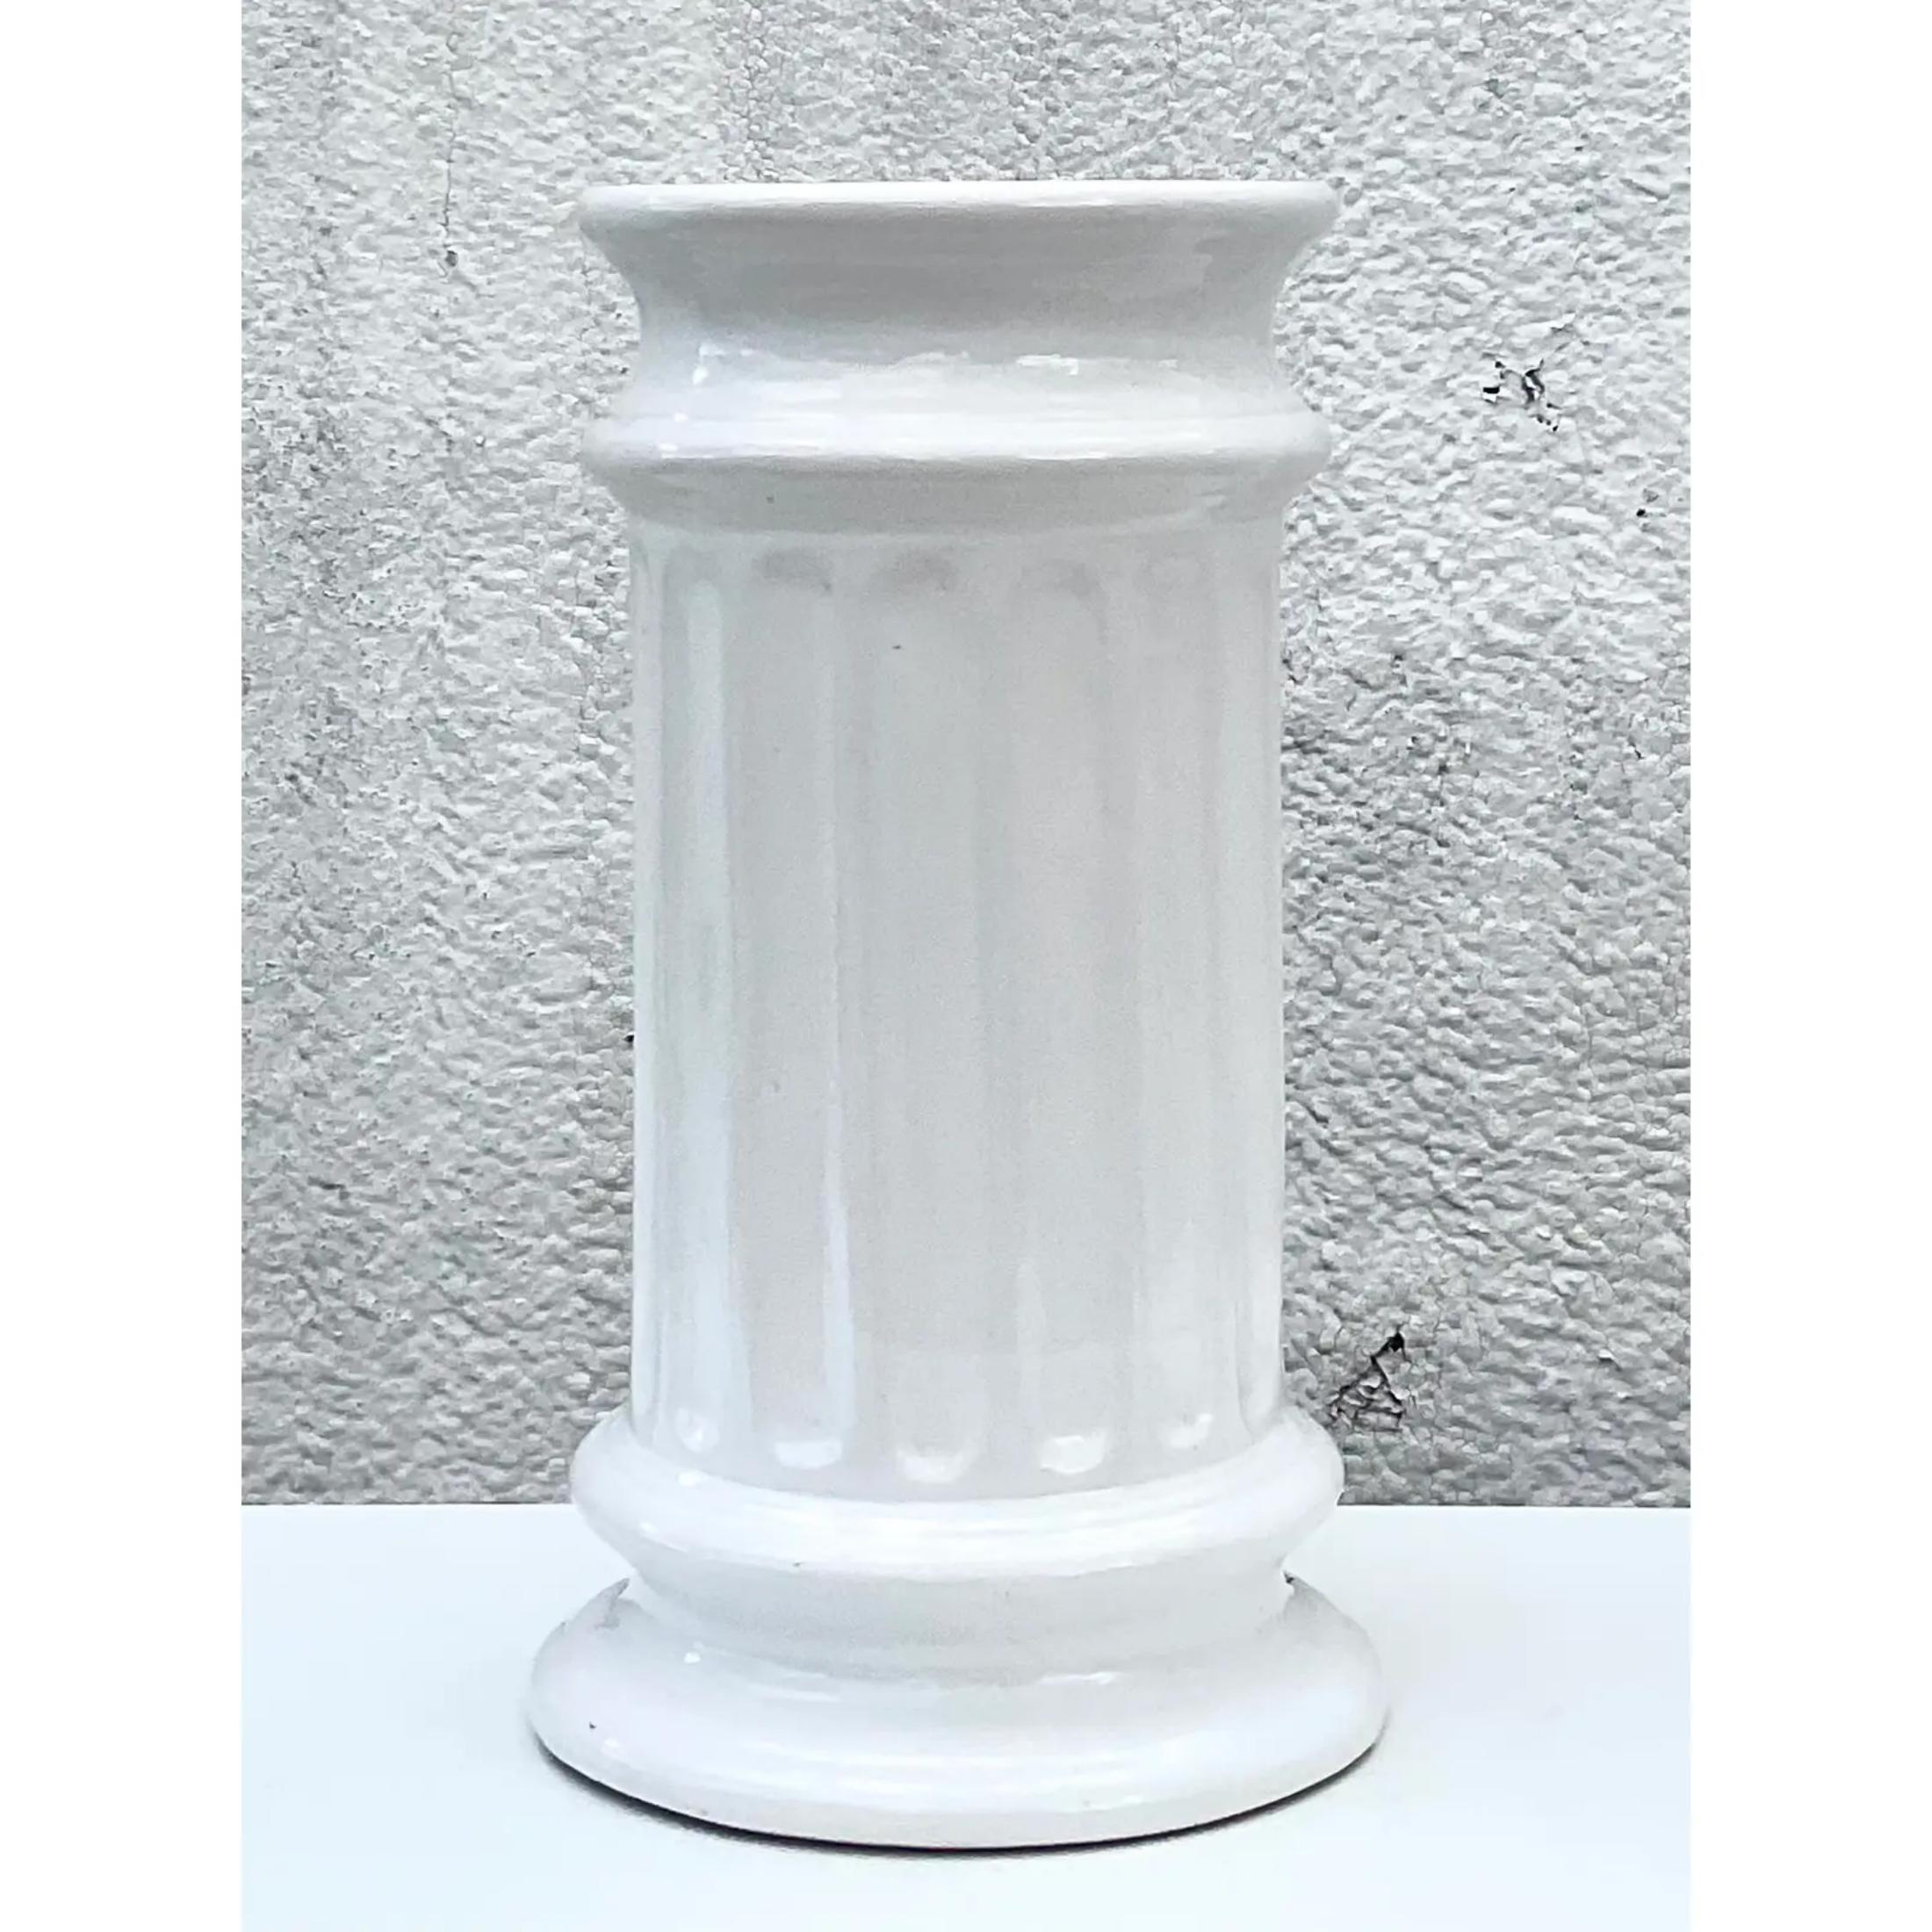 Fantastic vintage white umbrella stand. Beautiful glazed ceramic in a chic column design. Made in Portugal. Acquired from a Palm Beach estate